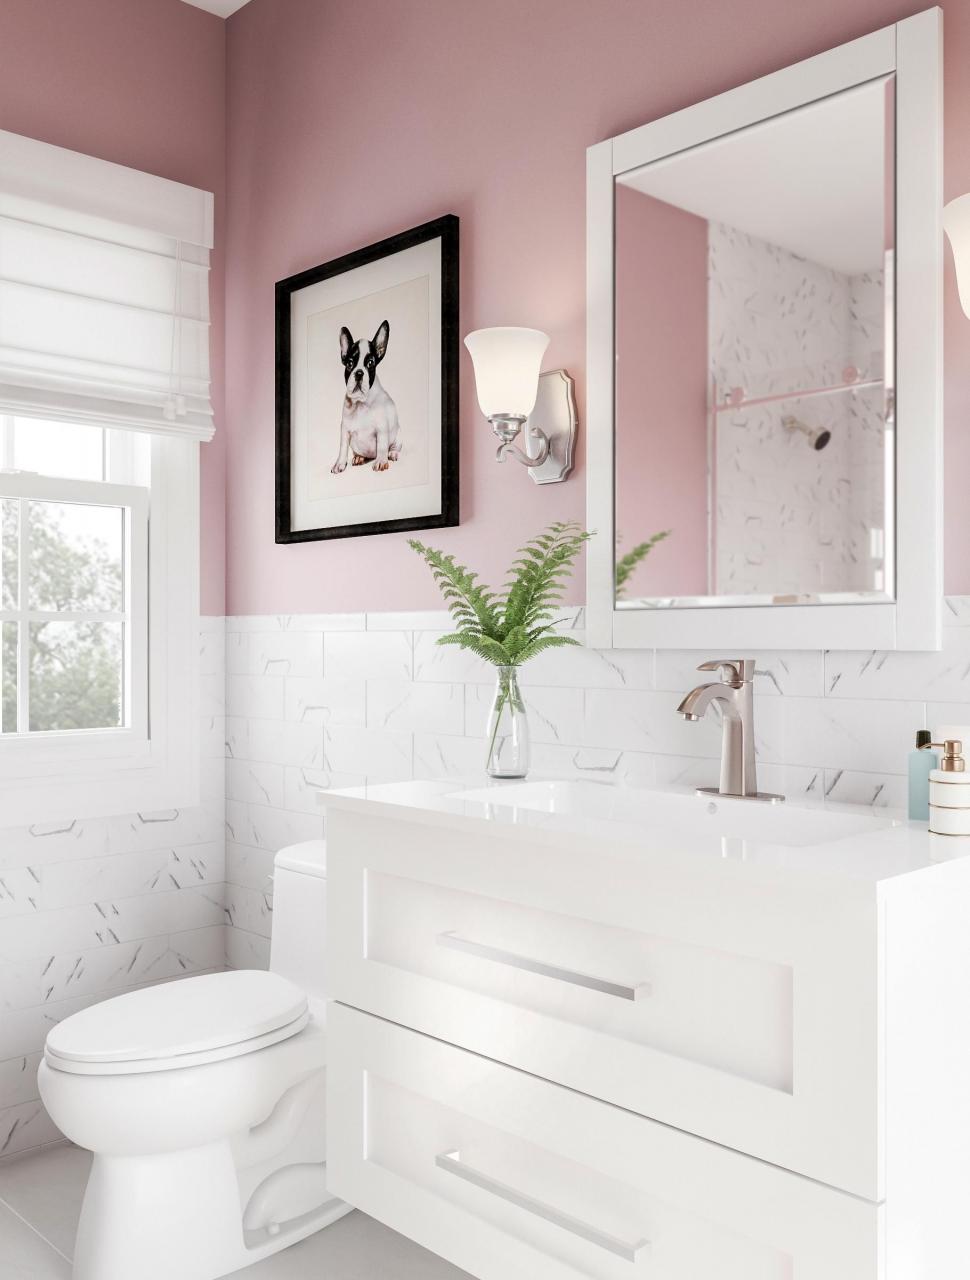 Dulux Blush Pink Bathroom Paint Blush pink wall paint, pink pillows